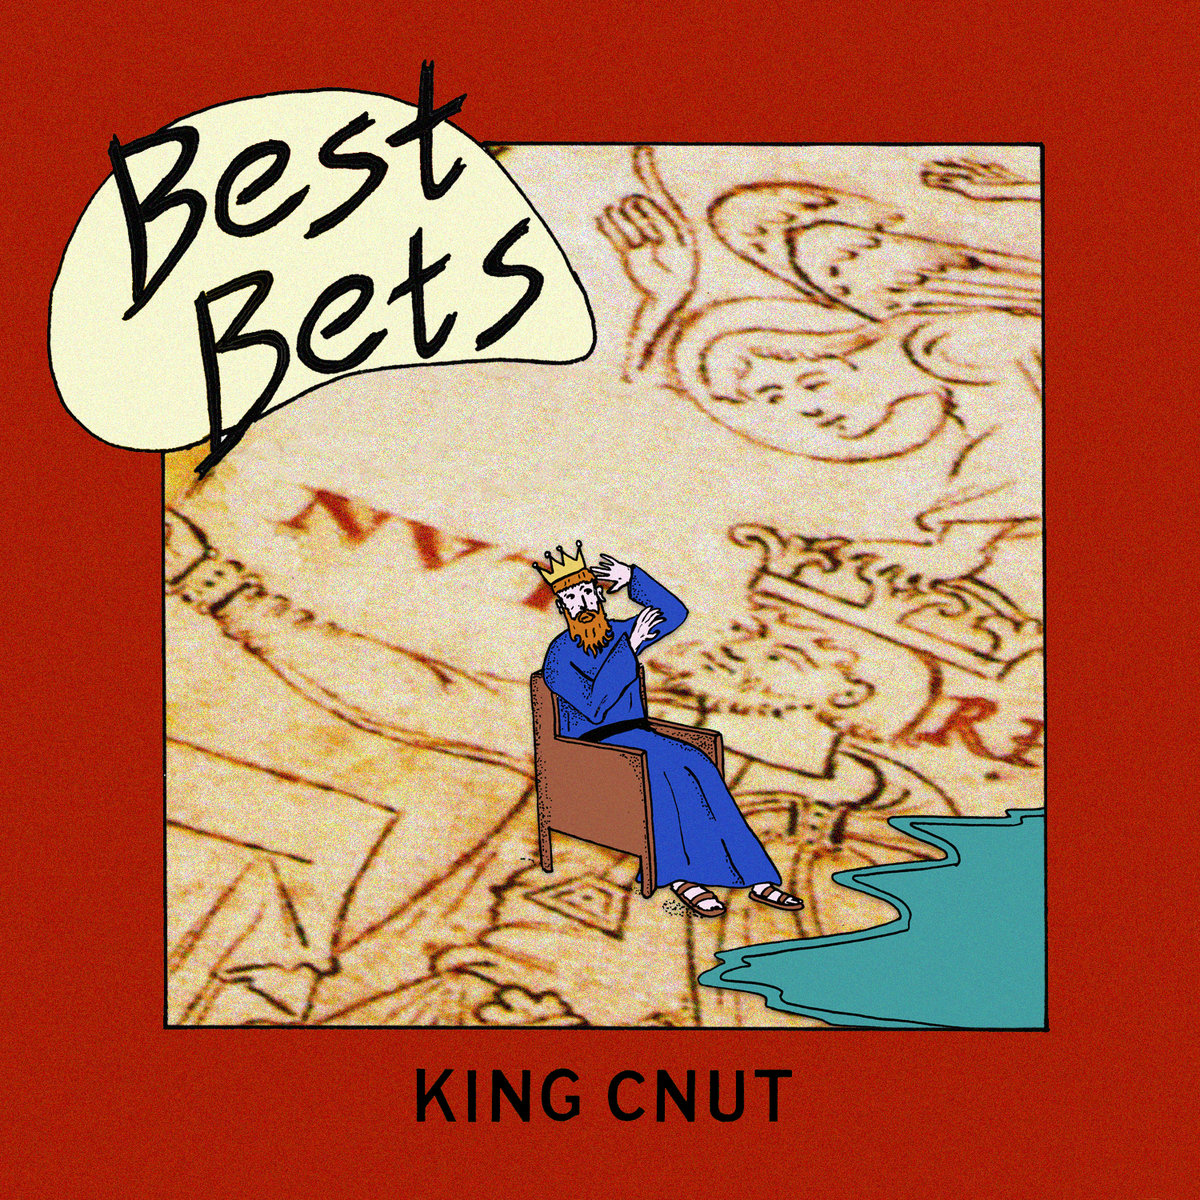 King Cnut